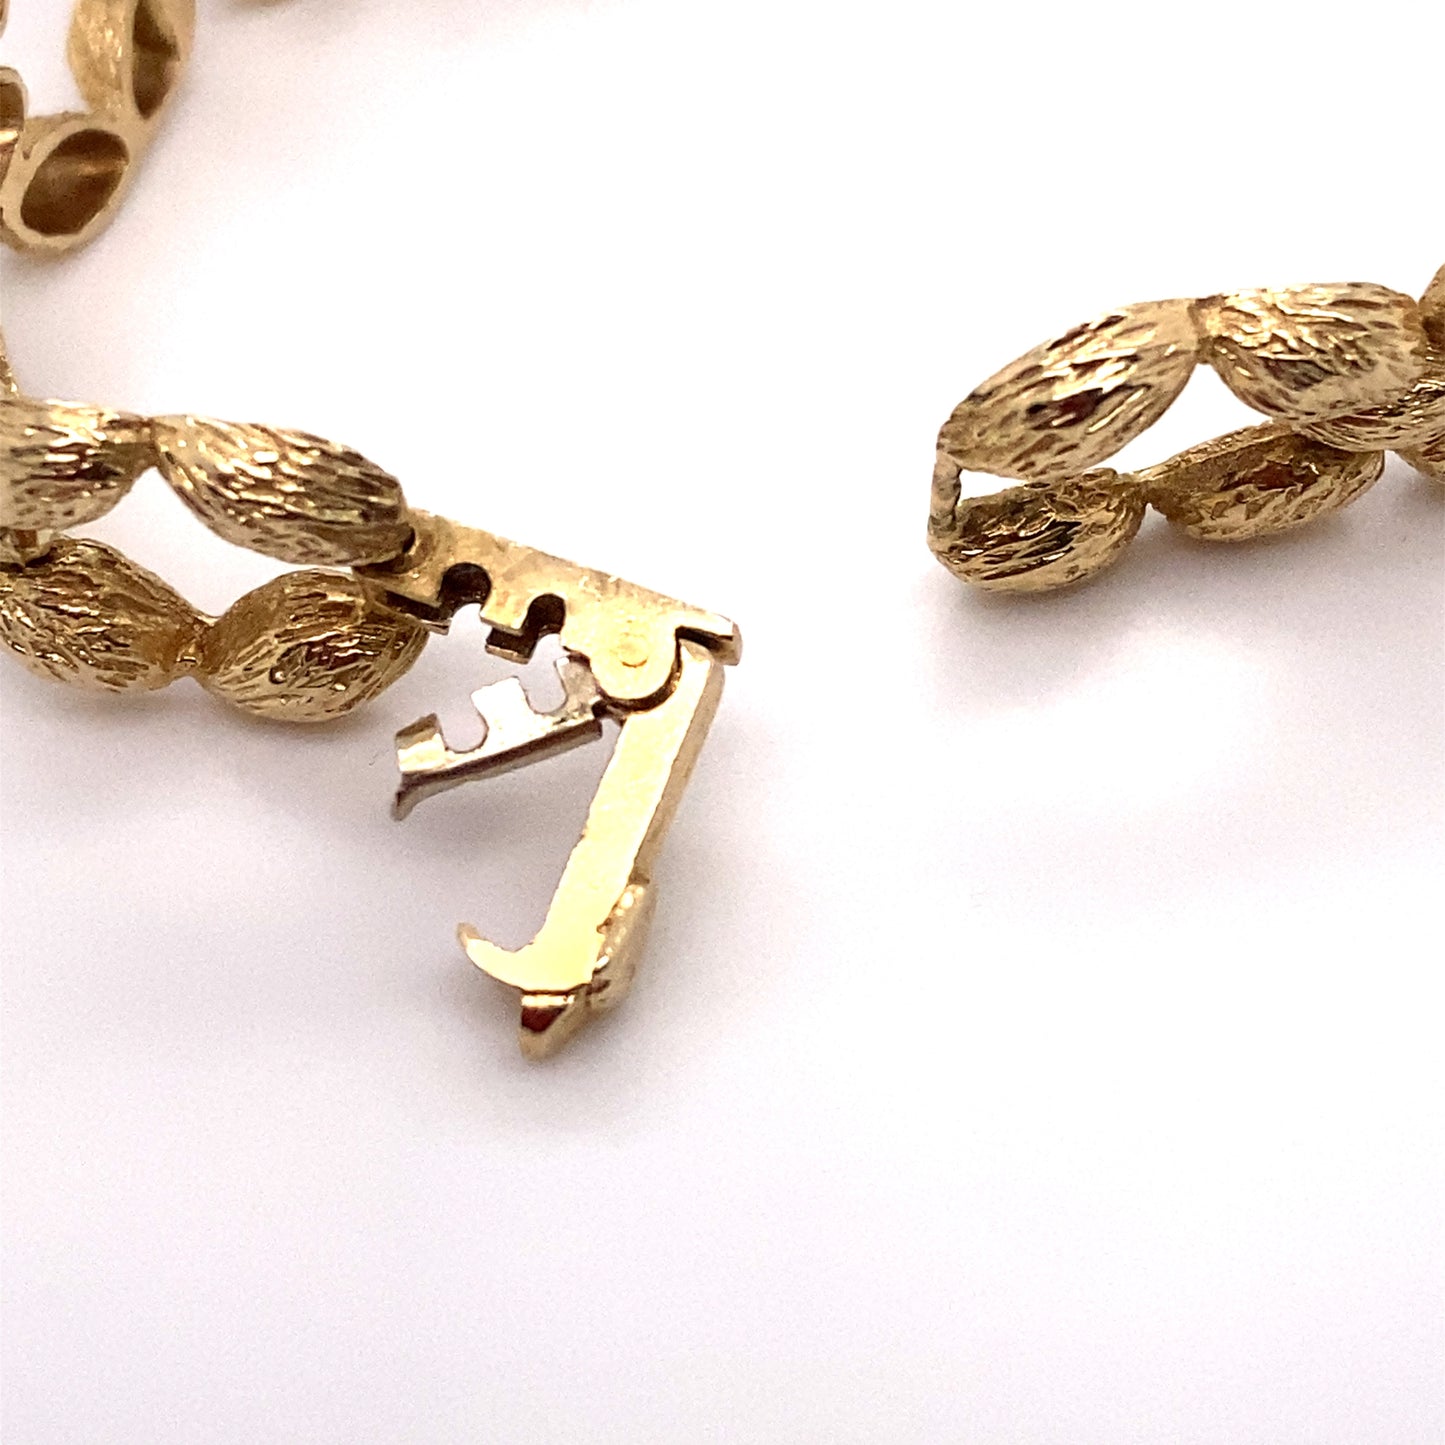 Circa 1940s Rolex Womens' Almond Bark Motif Open Link Wrist Watch in 14K Gold